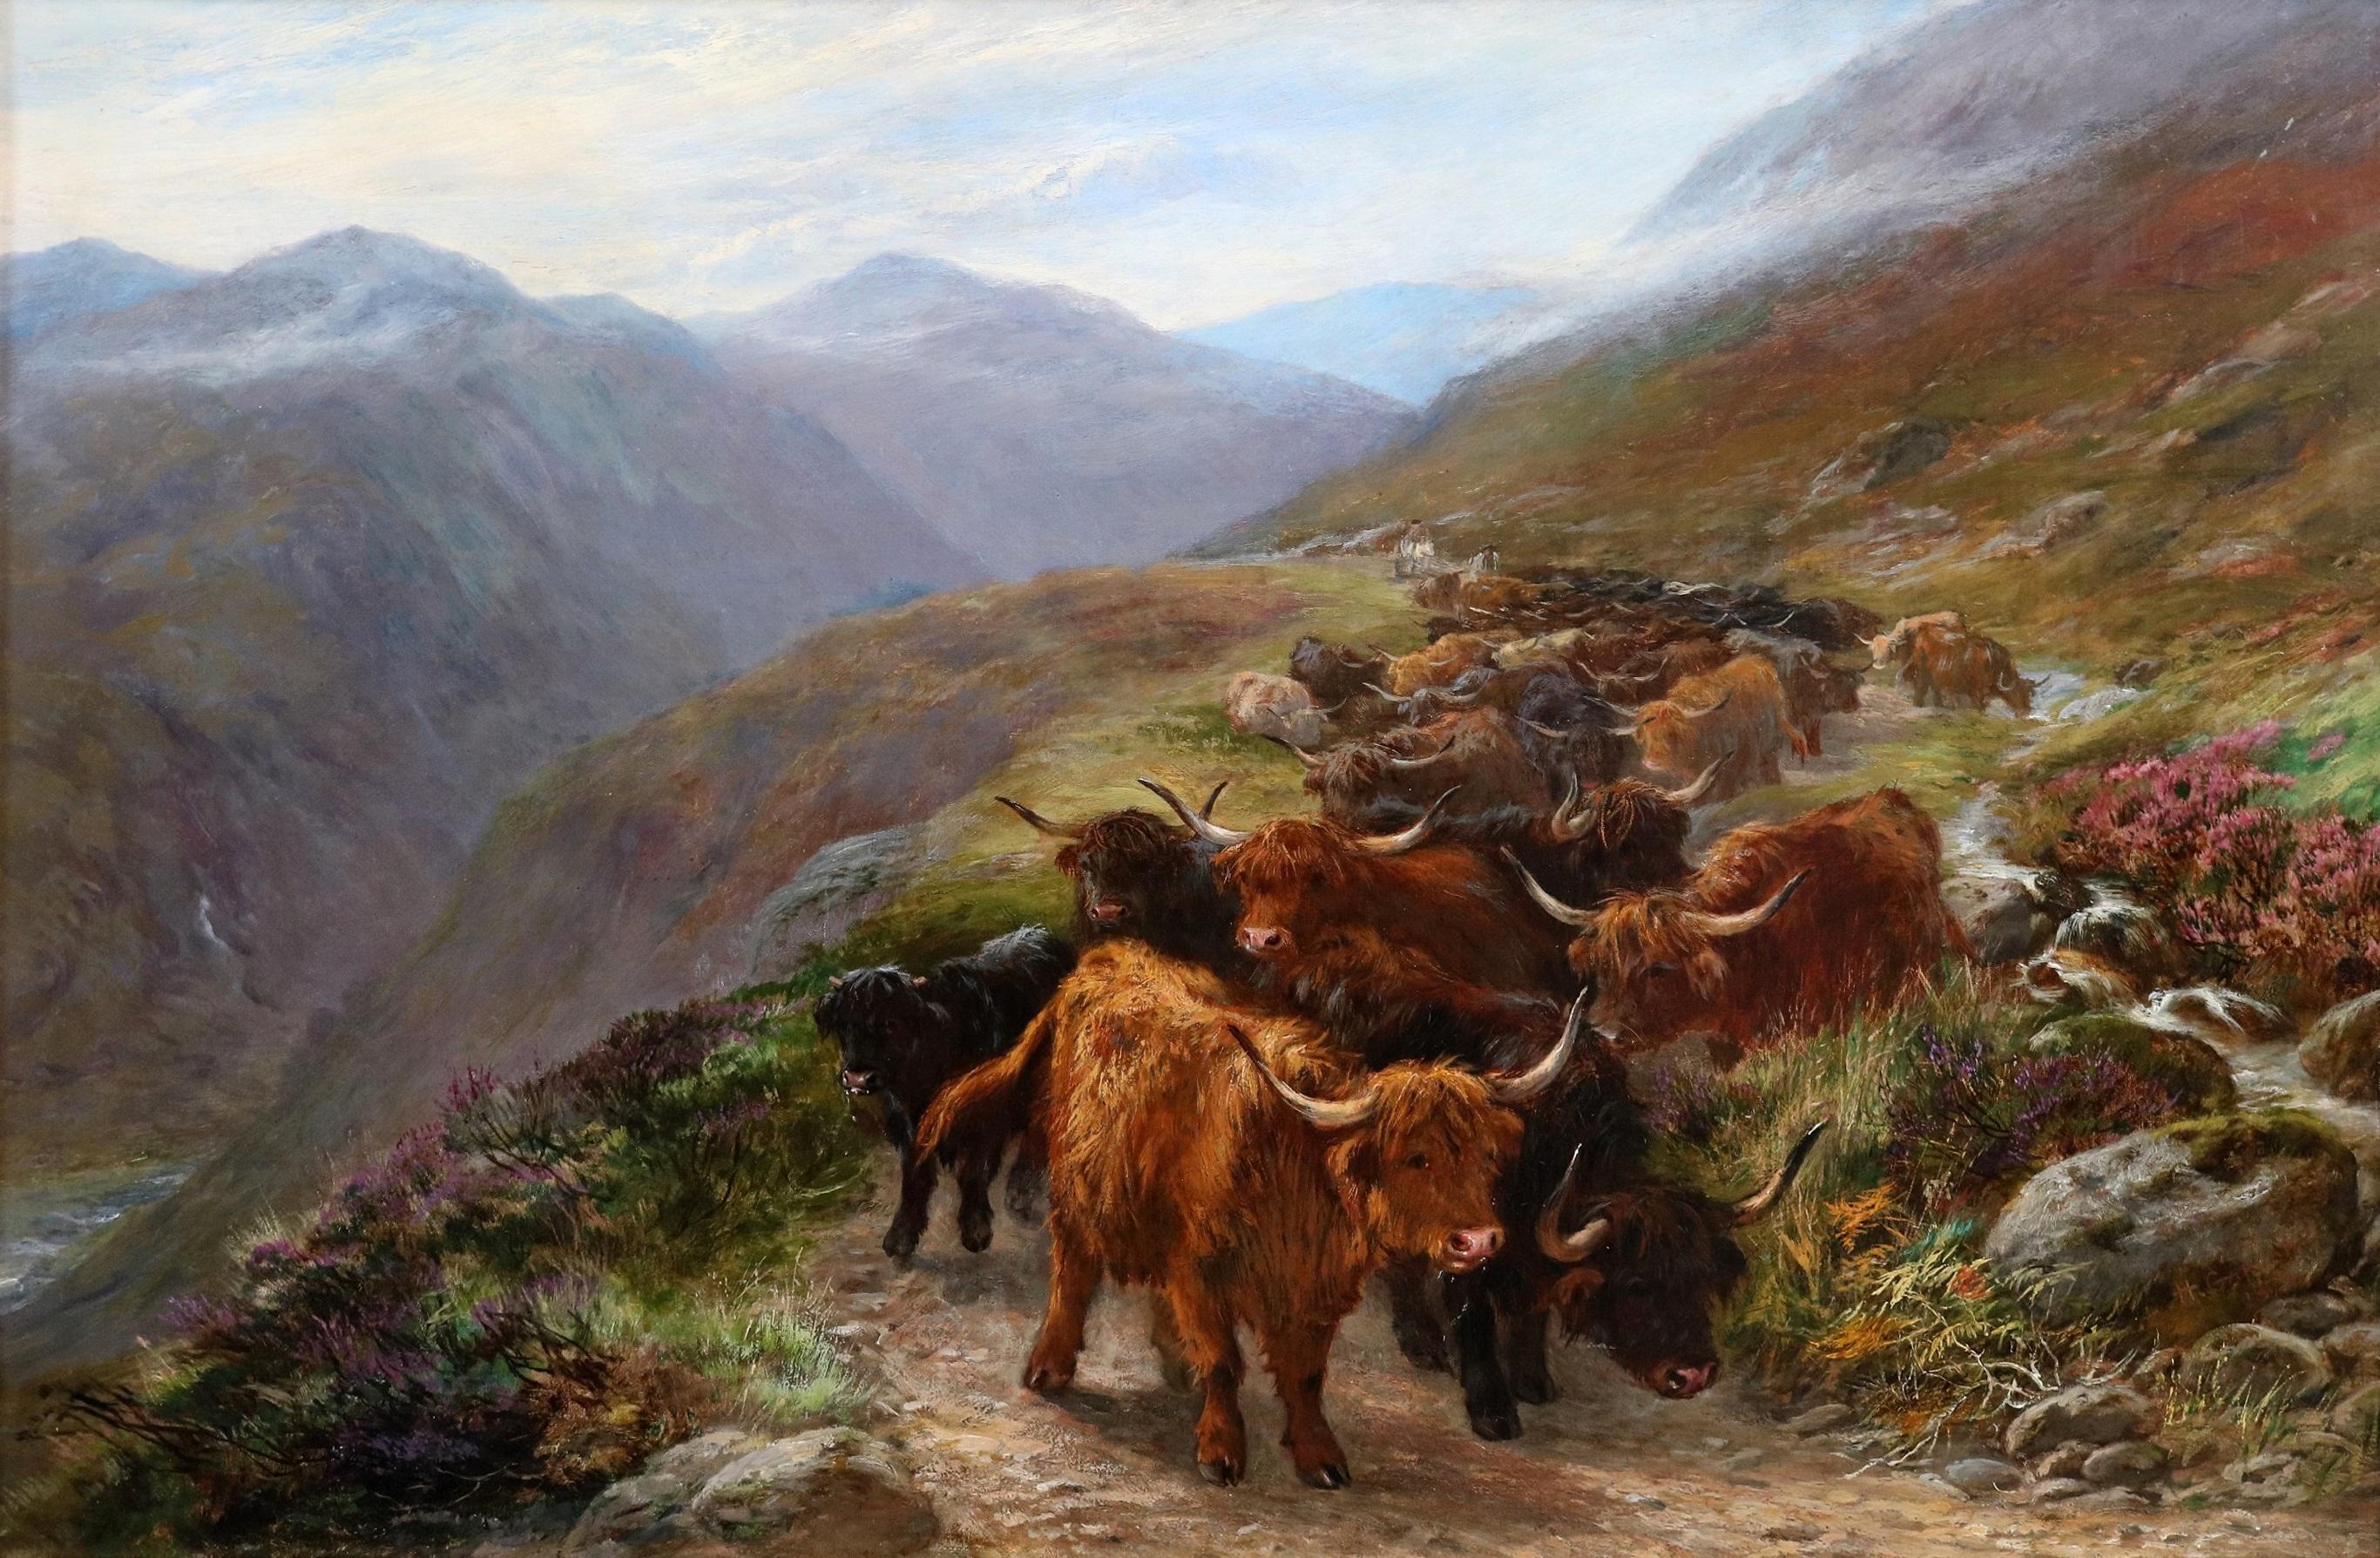 Longhorn Cattle on Highland Pass - Pintura al óleo de paisajes escoceses del siglo XIX  - Painting Victoriano de Henry Garland